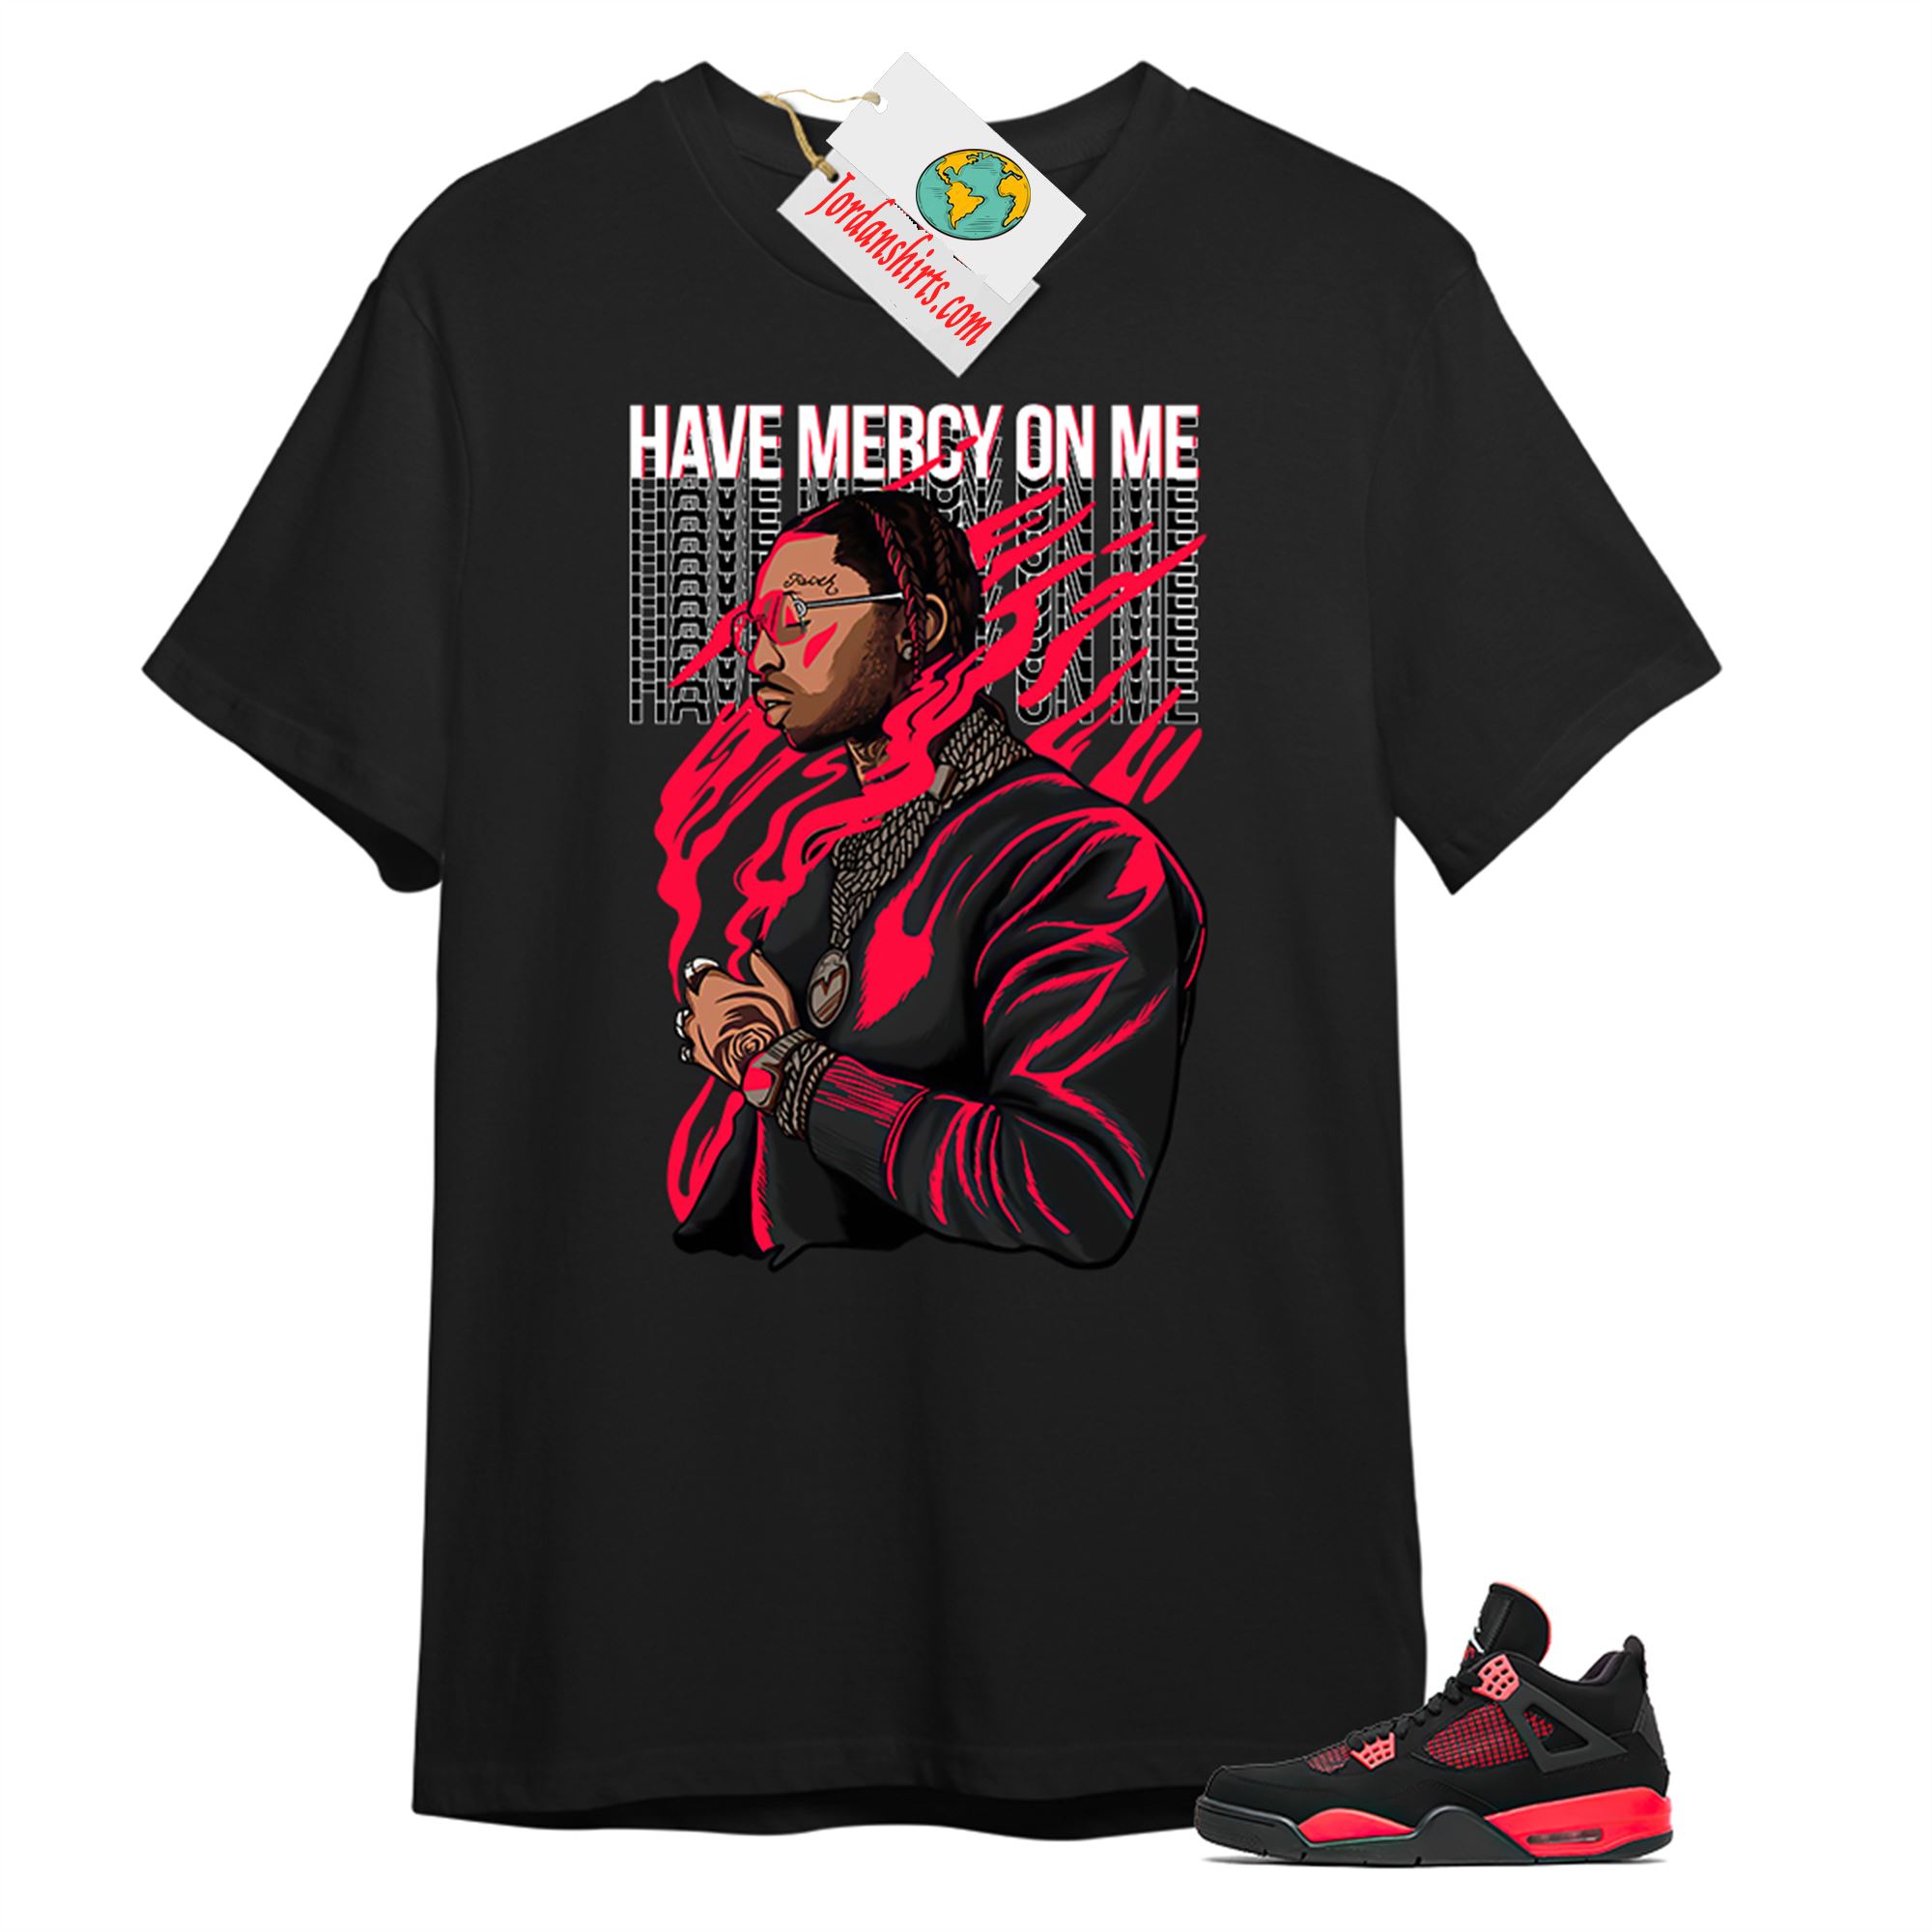 Jordan 4 Shirt, Have Mercy On Me Black T-shirt Air Jordan 4 Red Thunder 4s Full Size Up To 5xl